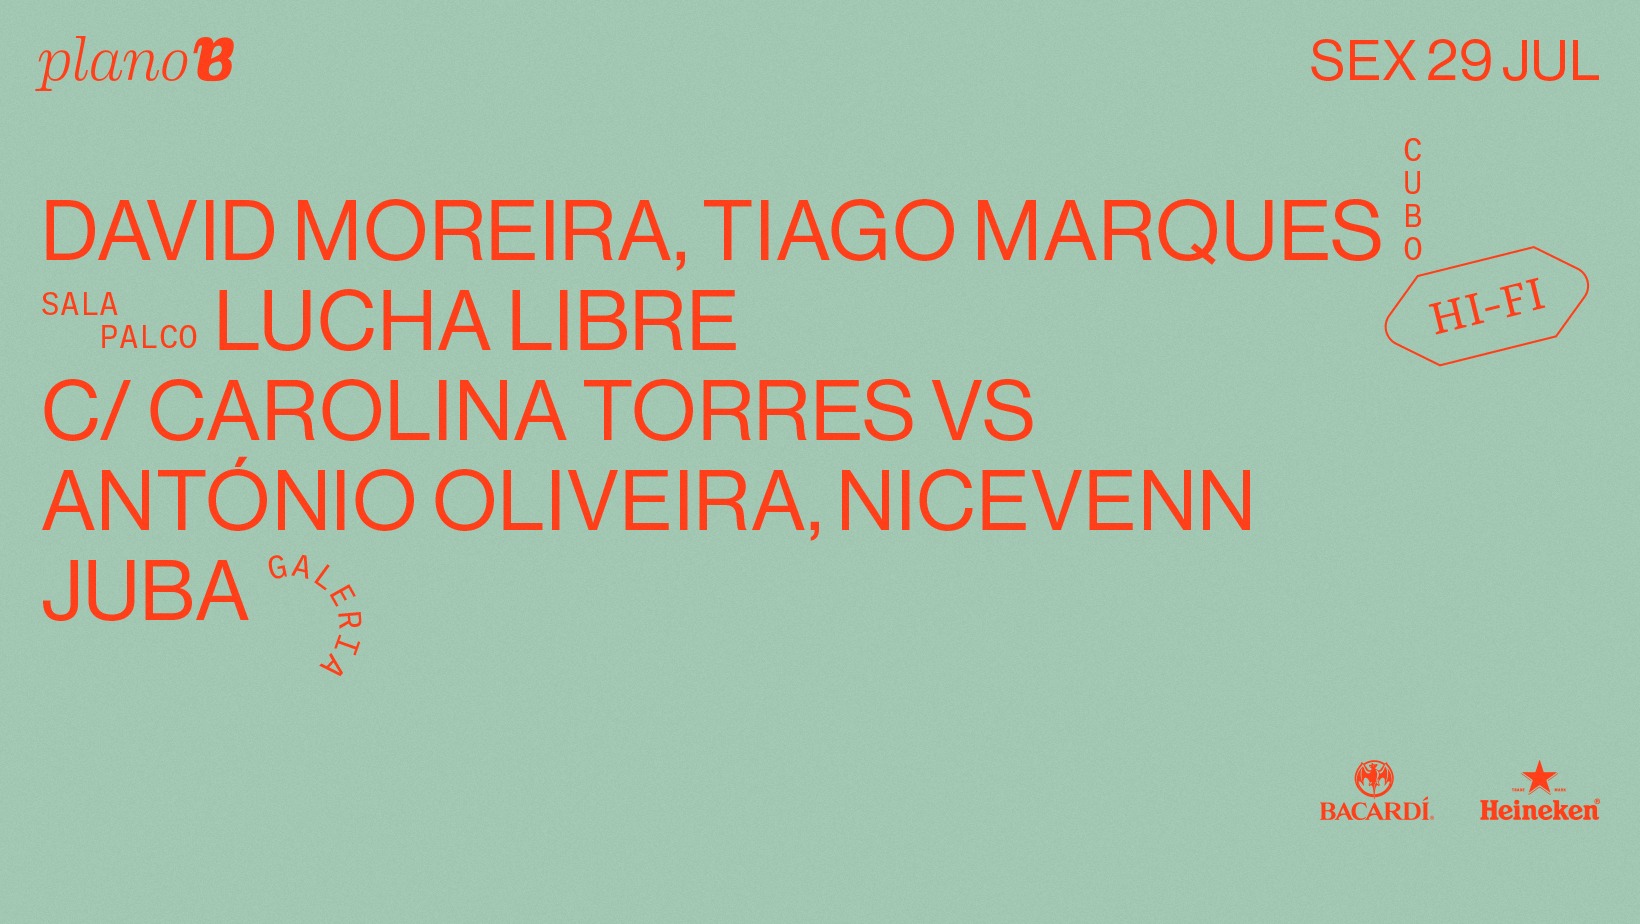 David Moreira, Tiago Marques, Carolina Torres vs António Oliveira, Nicevenn, Juba - Plano B